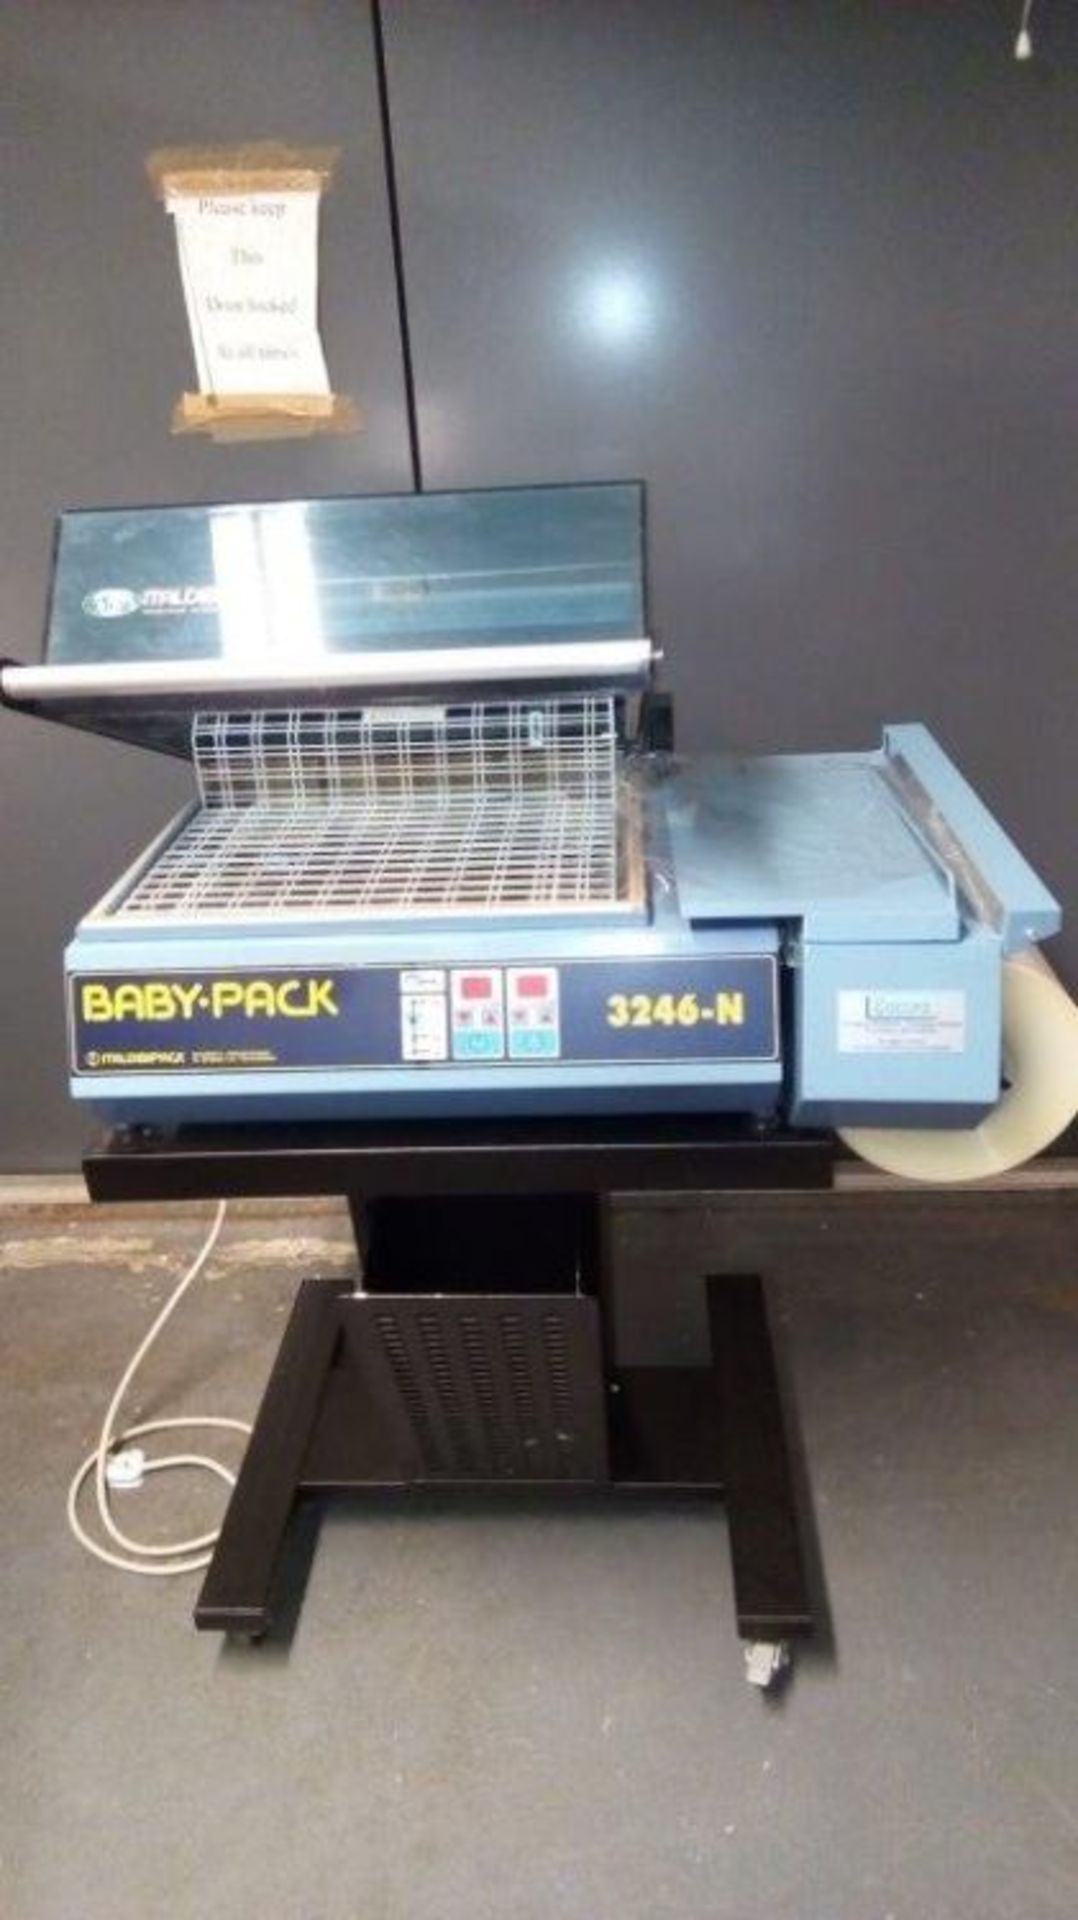 * An Italdibipack Sontex Baby-Pack 3246-N Shrink Wrap Machine, sealing area W 320m x L 460mm, max